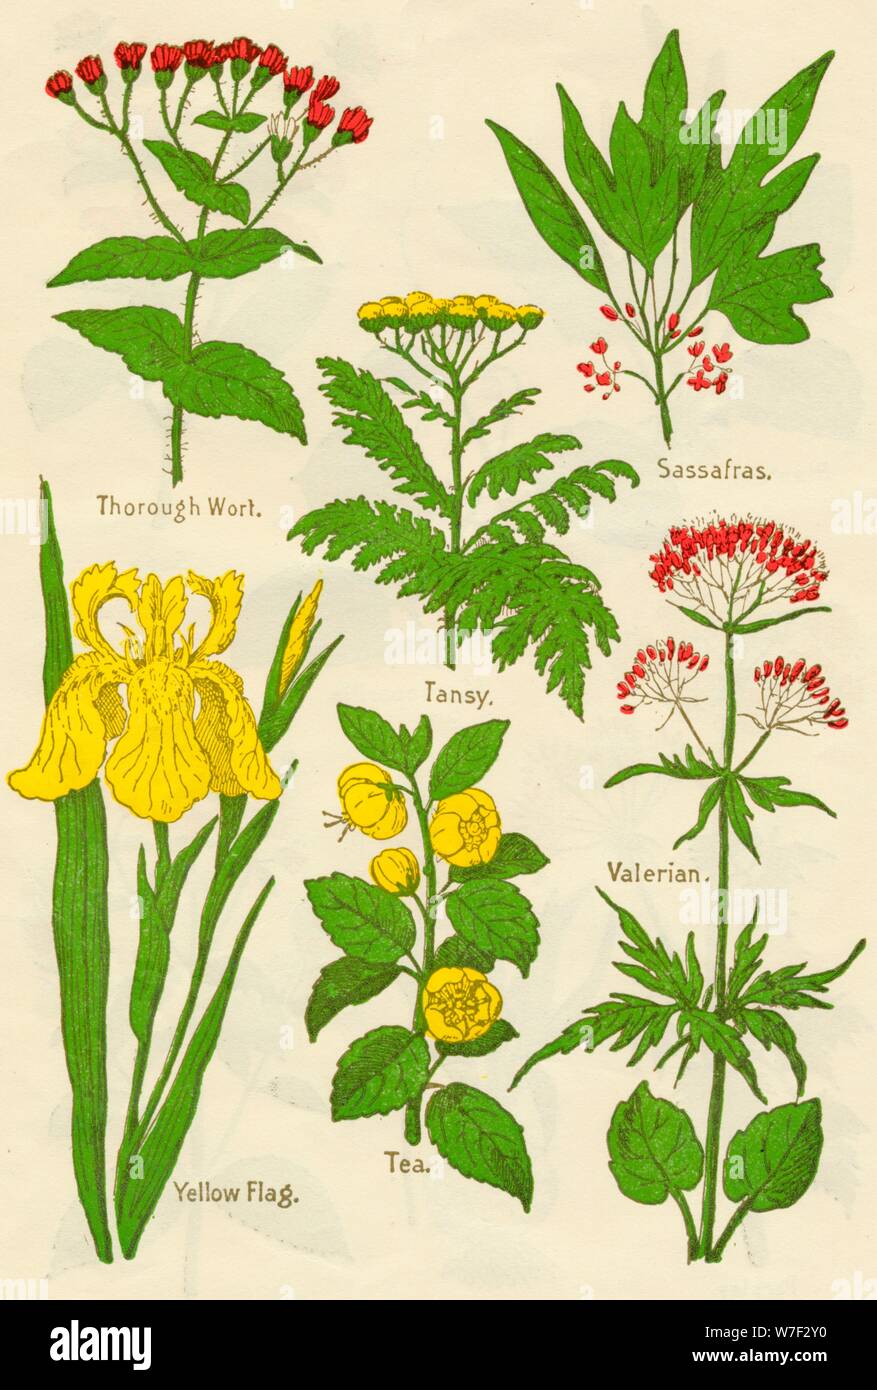 Flowers: Thorough Wort, Tansy, Sassafras, Valerian, Yellow Flag, Tea, Valerian, c1940. Artist: Unknown. Stock Photo